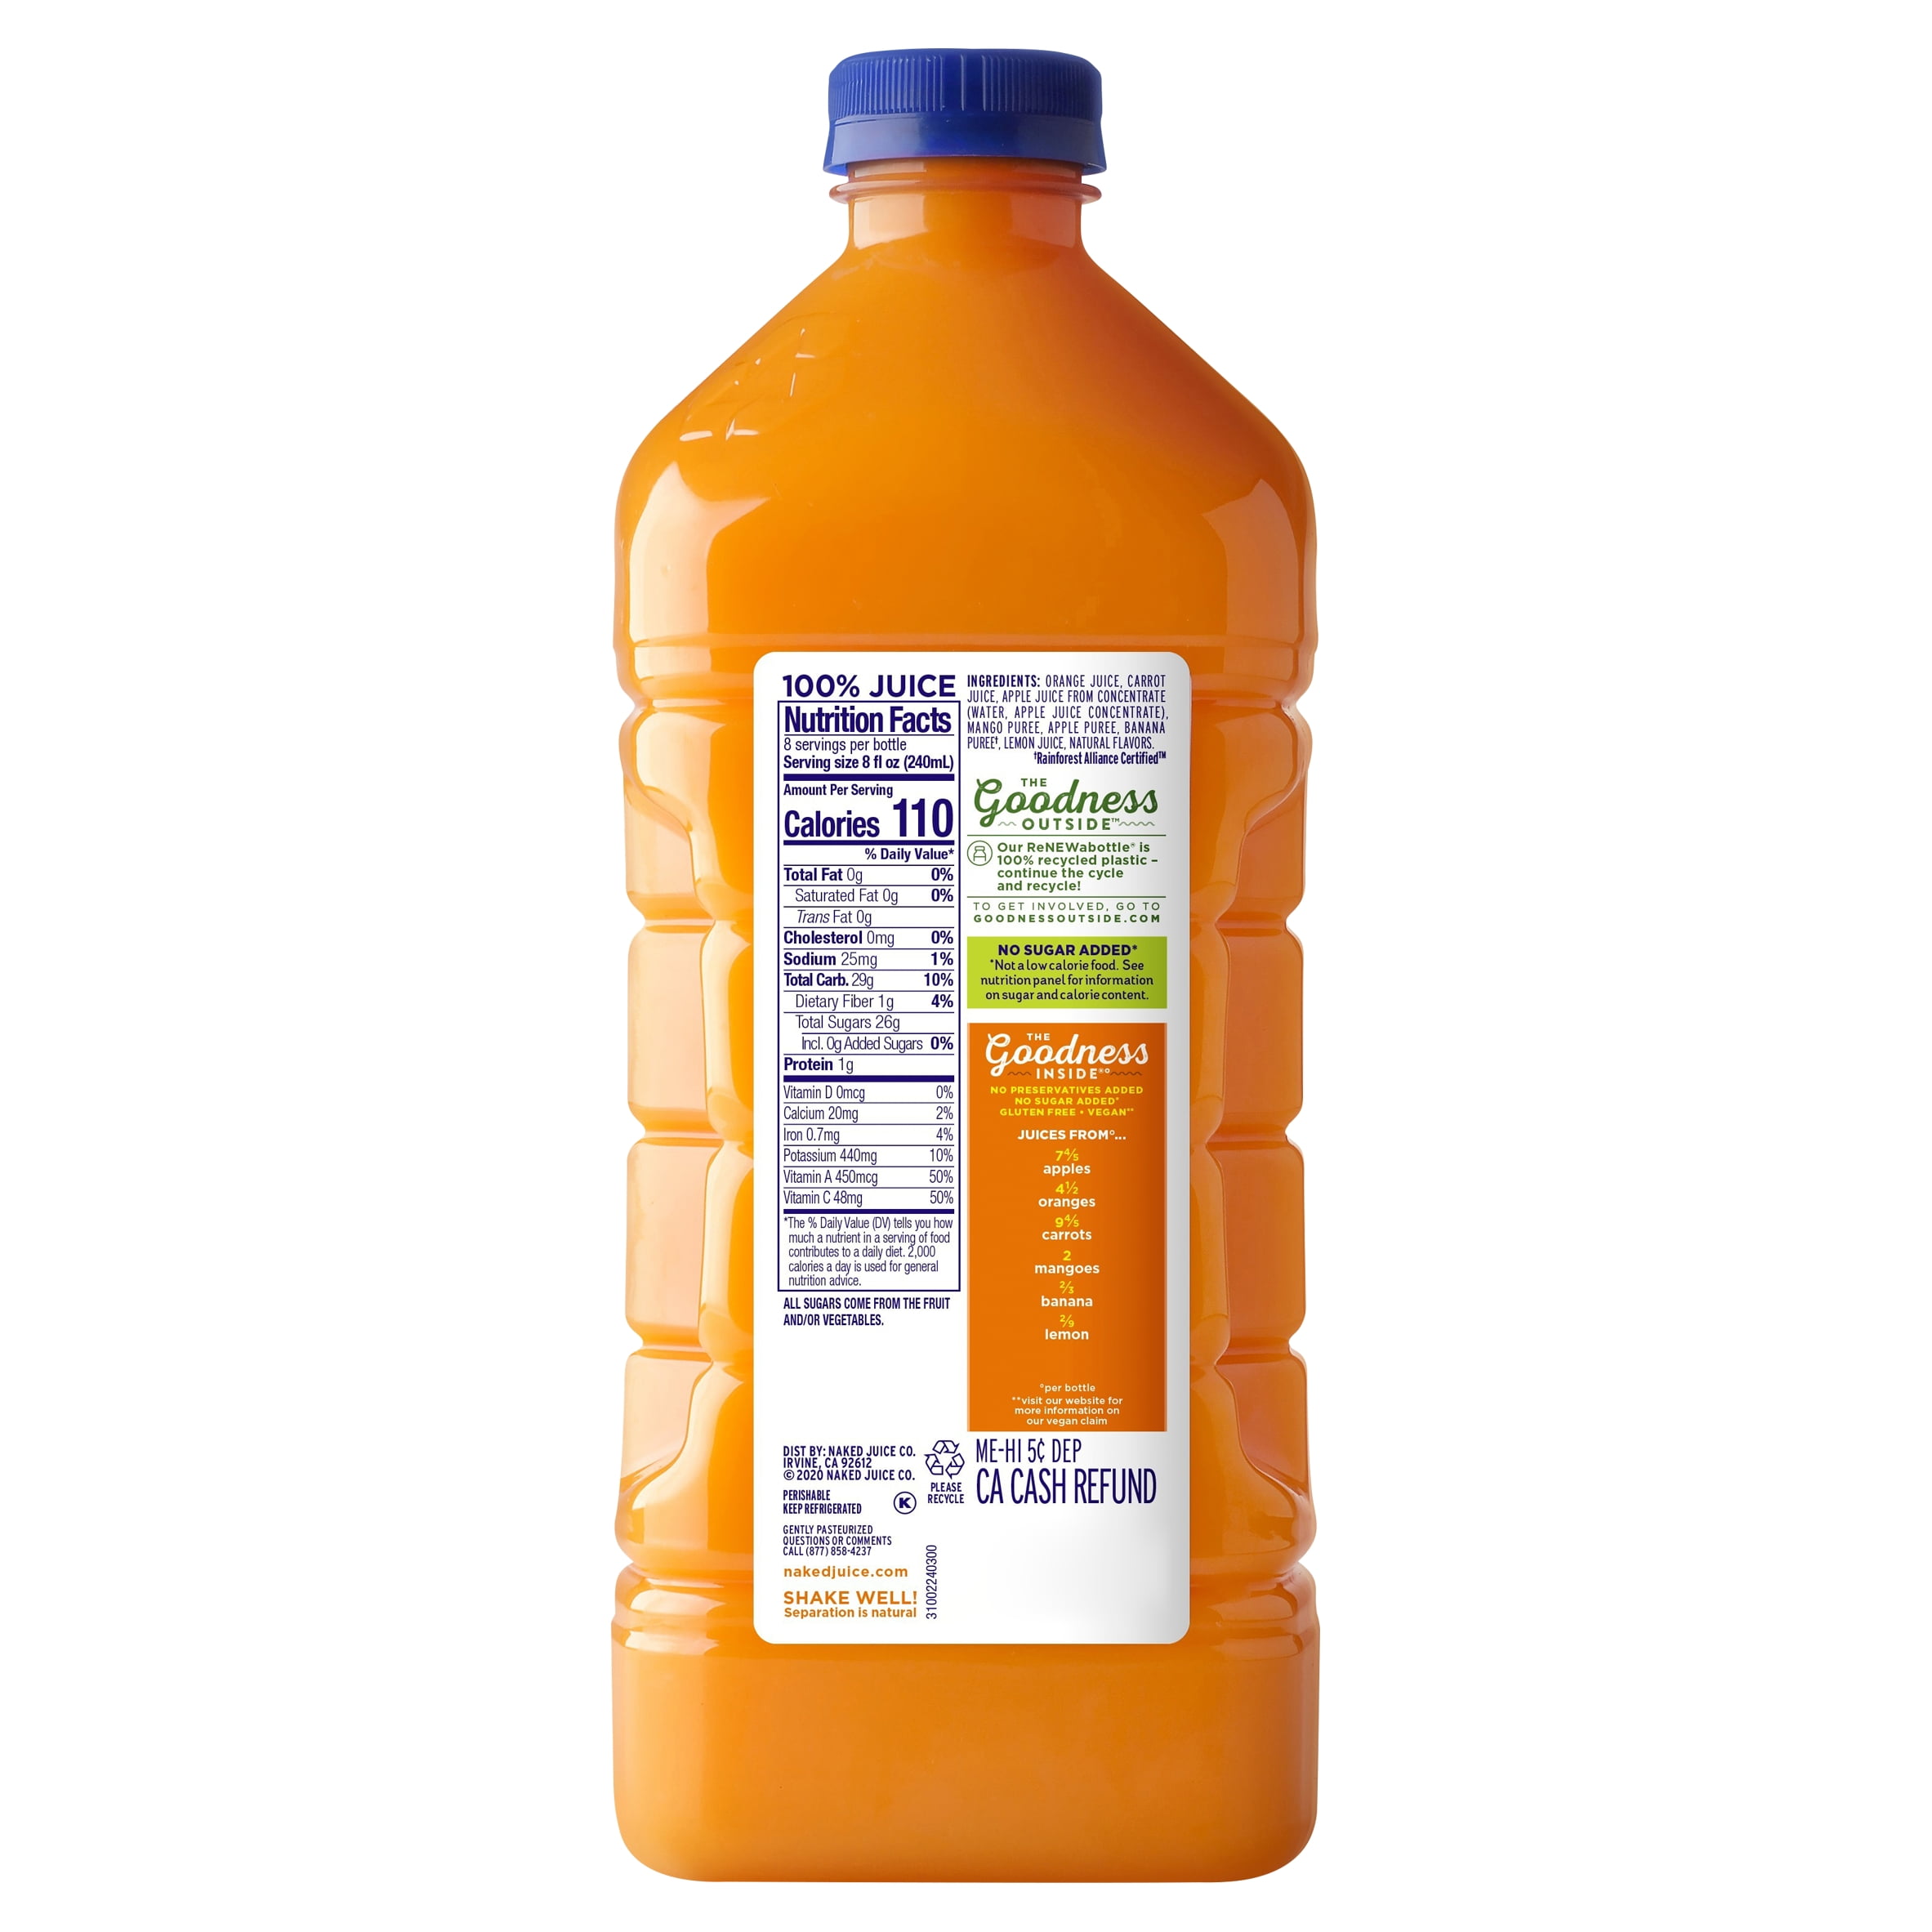 Naked Juice Immune Support Fl Oz Bottle Home Garden